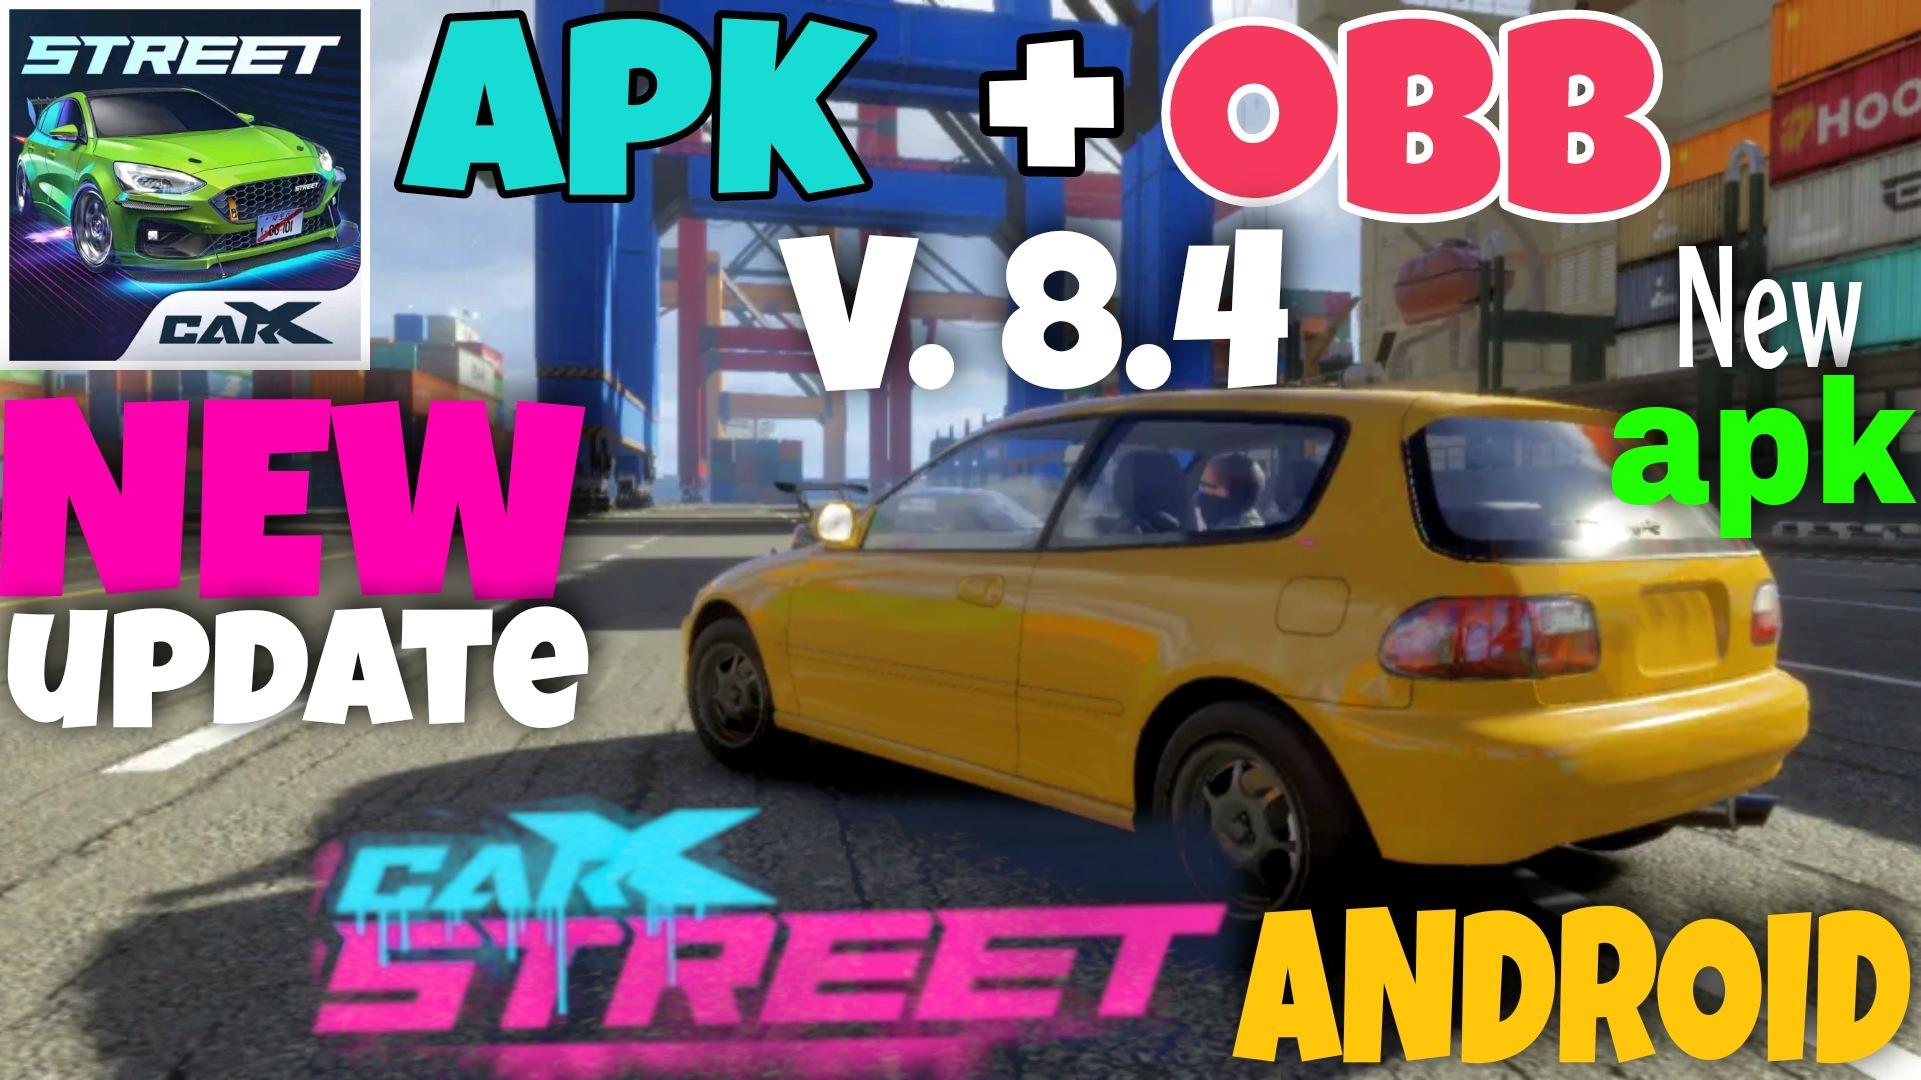 CarX Street Mod APK 1.1.1 (Unlimited money) latest version 2023